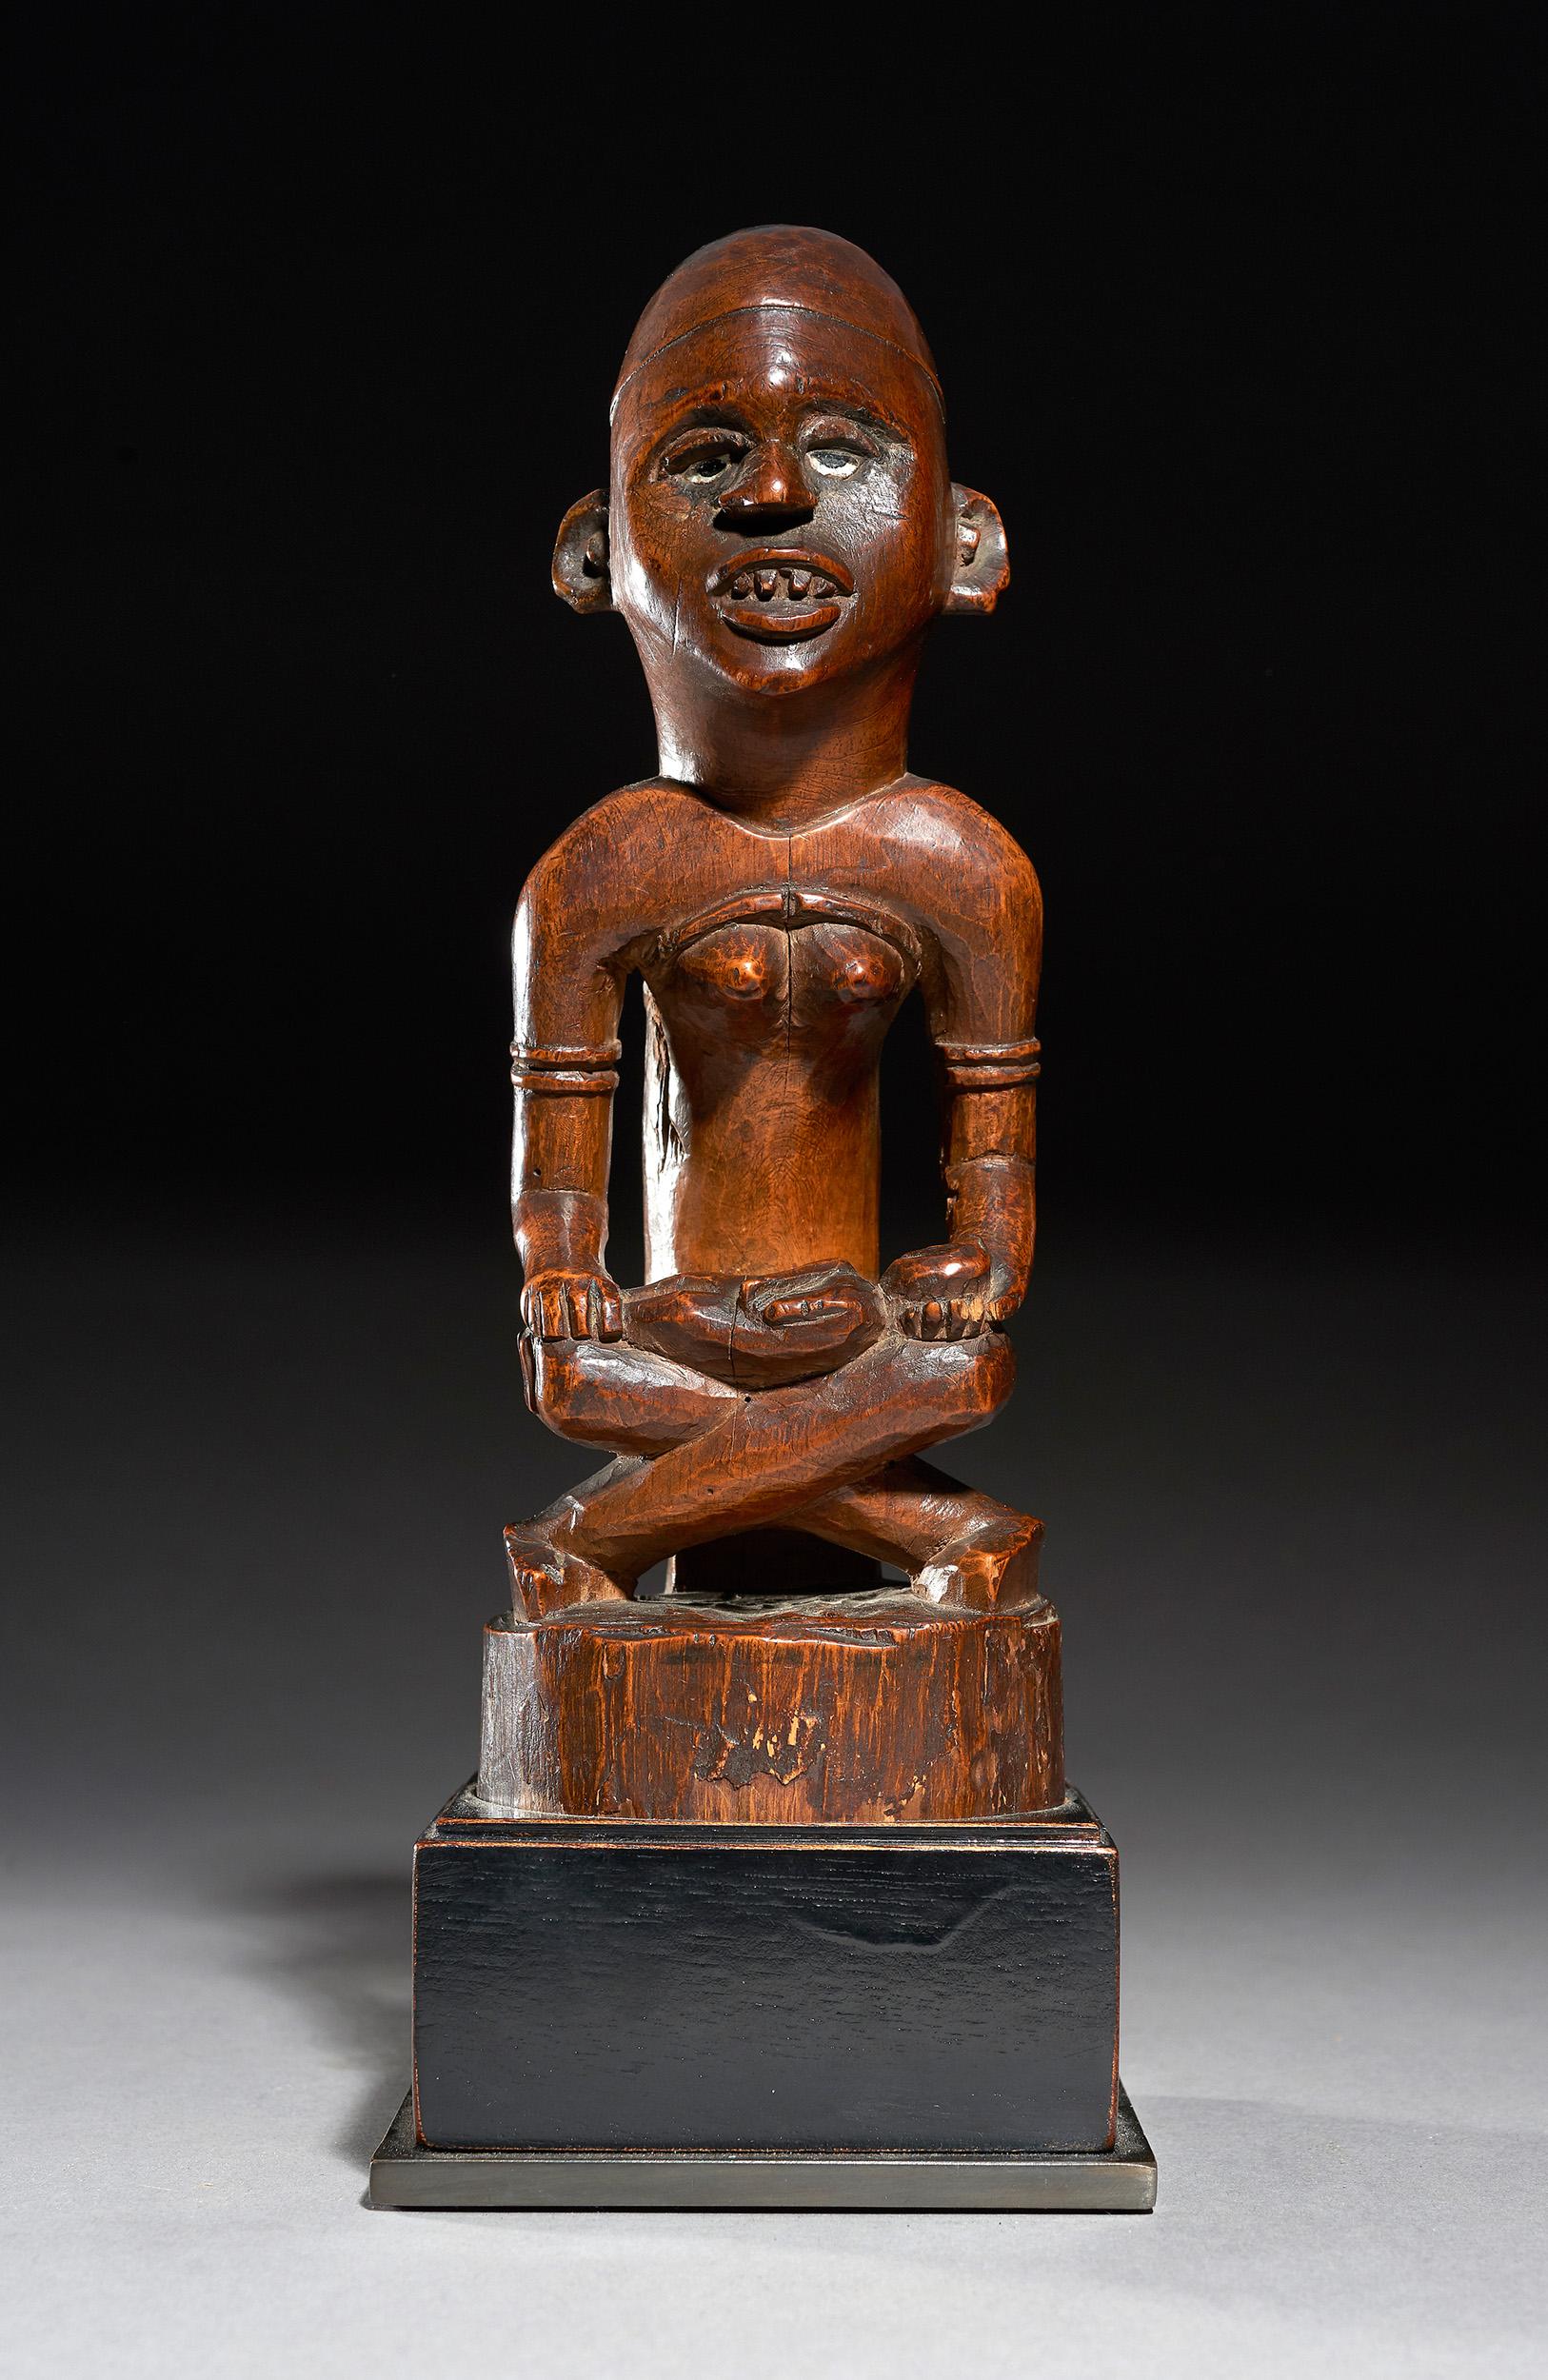 Mother and Child Figure "Phemba", Kongo, DRC